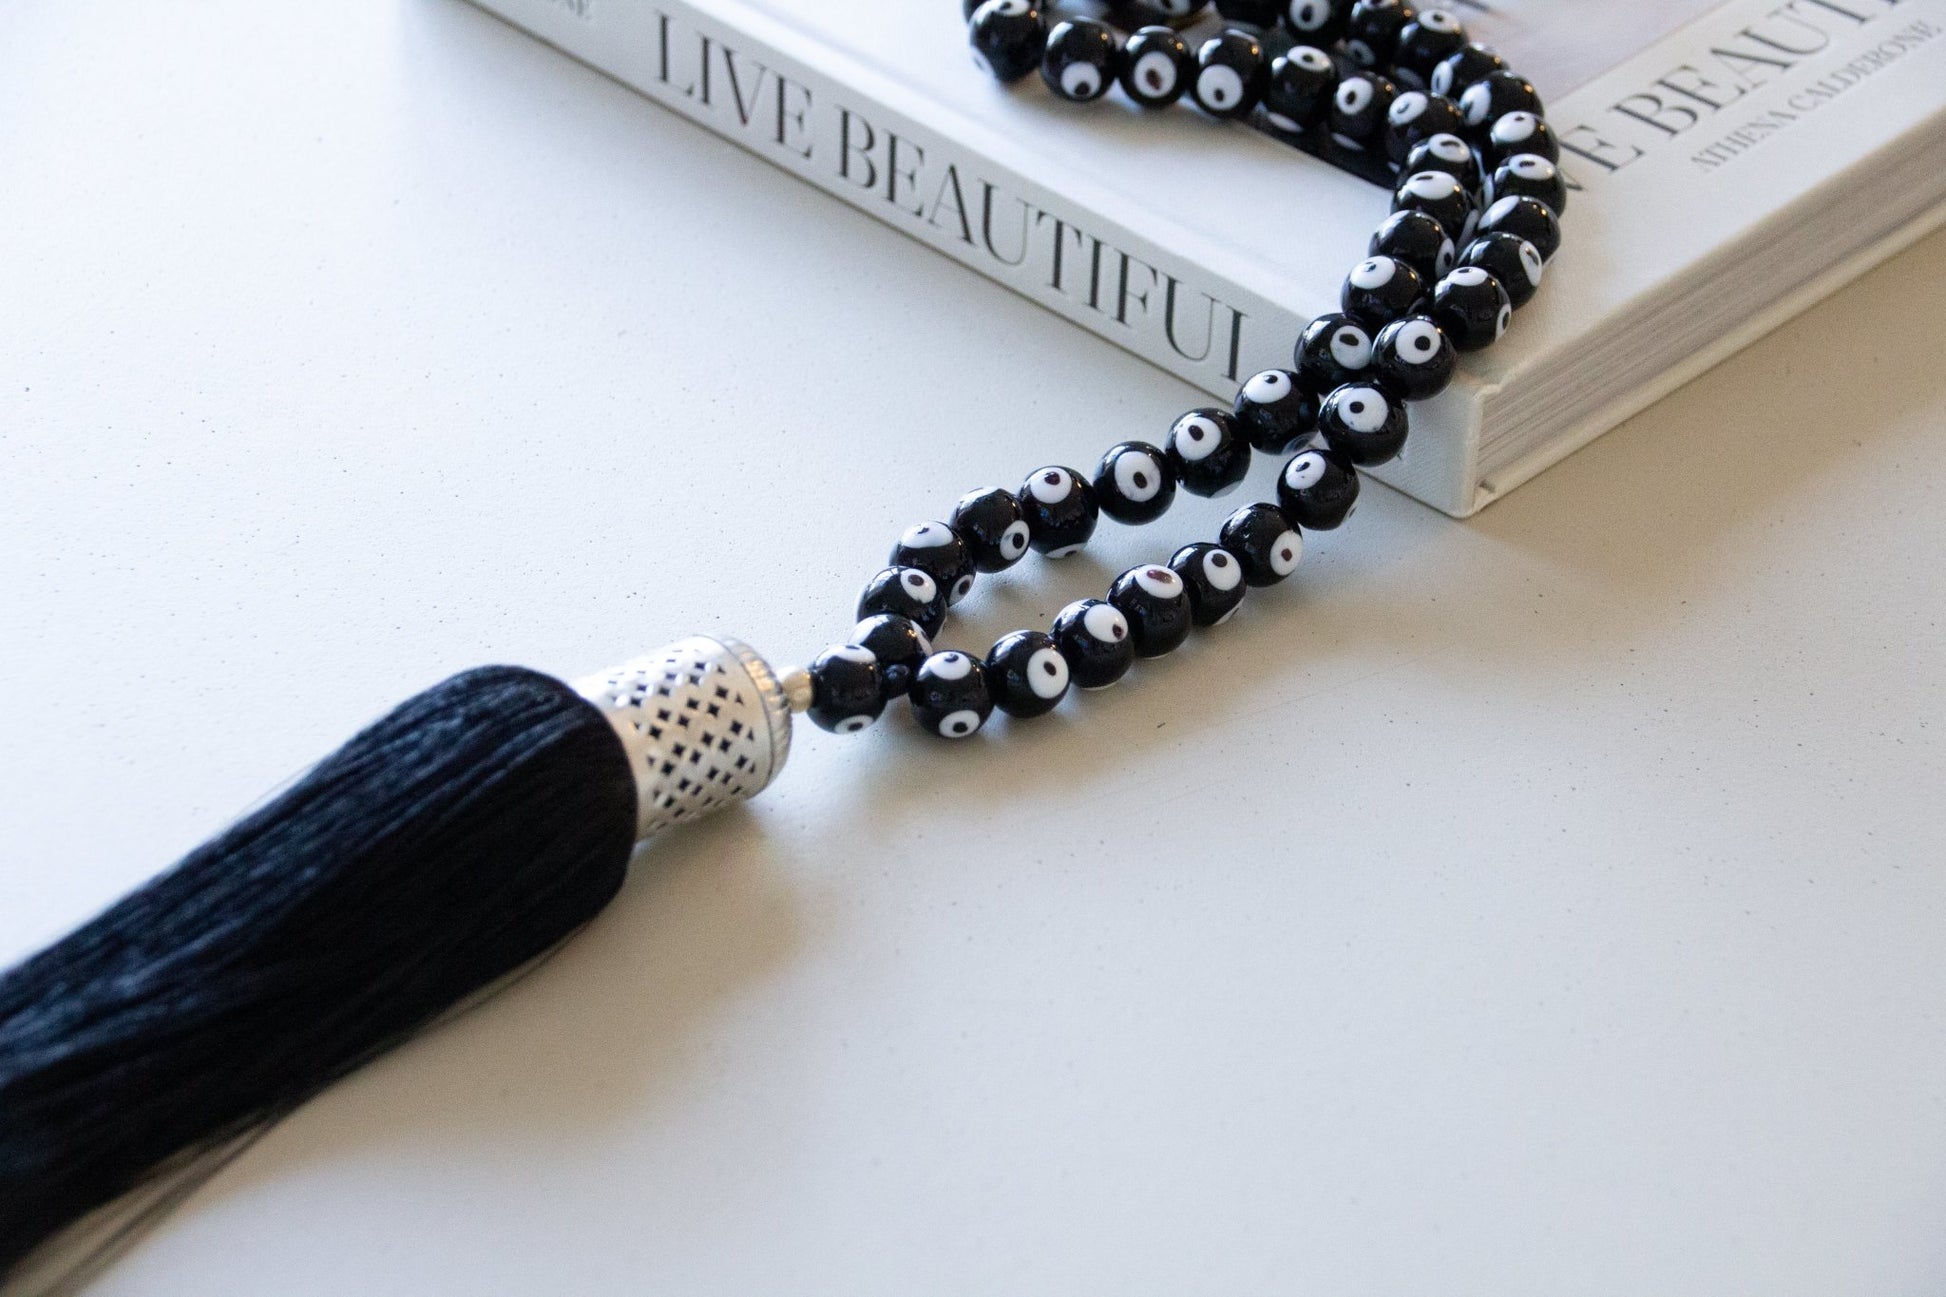 Evil eye home decor black glass beads necklace - Stylish Luck Home Decor | Hamsa \ Hand Of Fatima | Good Luck Gifts